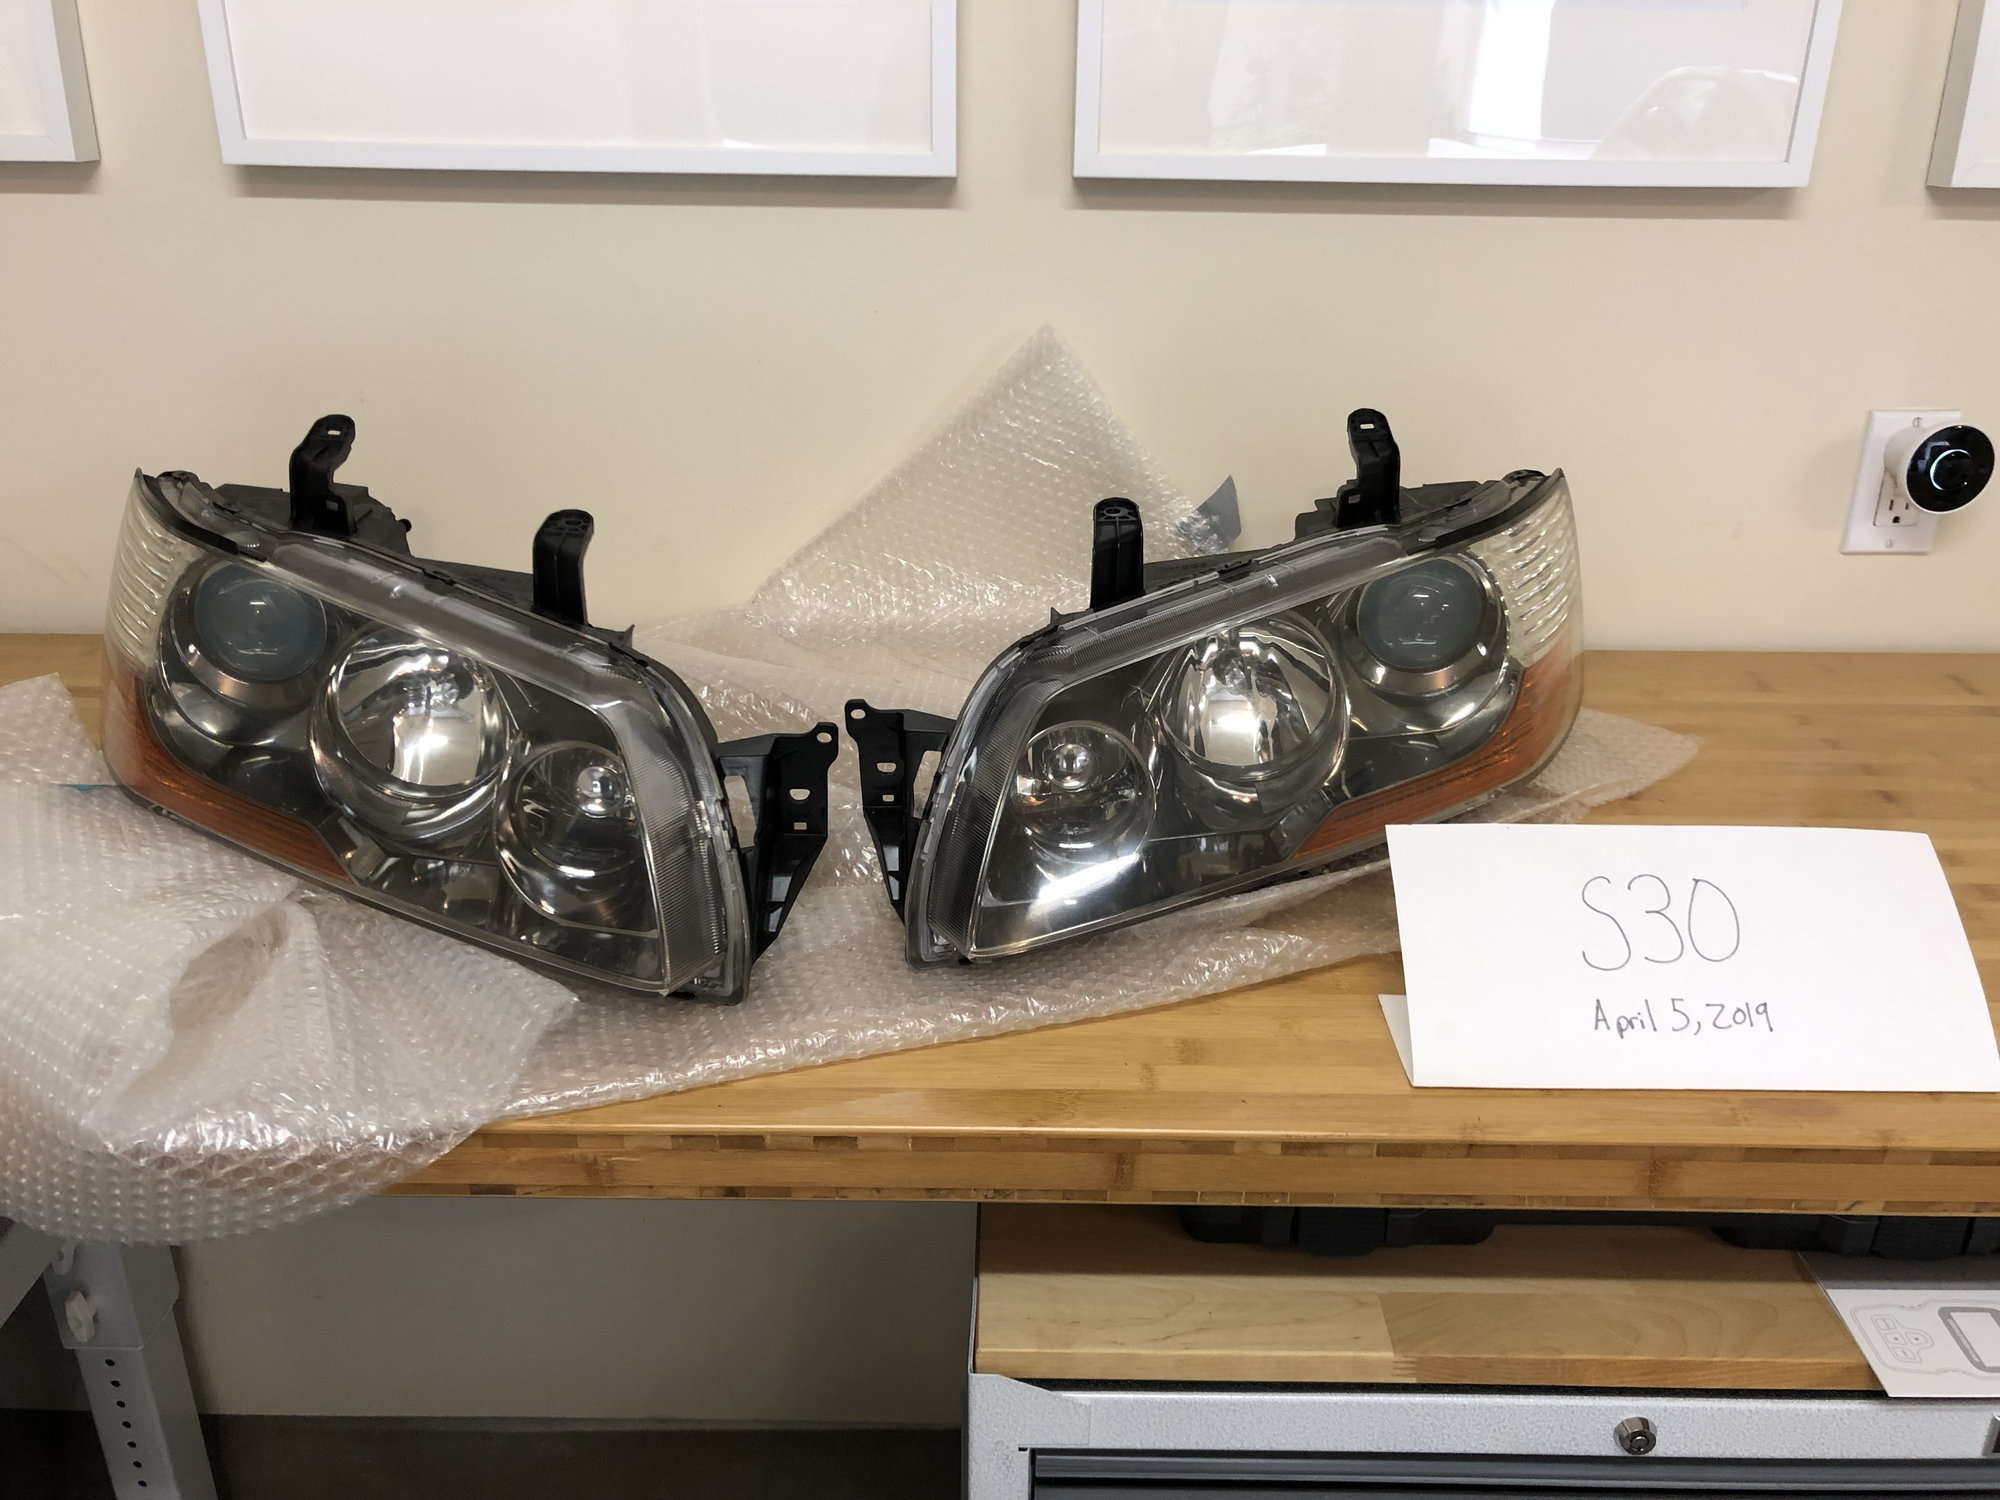 Lights - IX JDM HID headlights, very clean - Used - 2006 to 2007 Mitsubishi Lancer Evolution - San Jose, CA 95014, United States